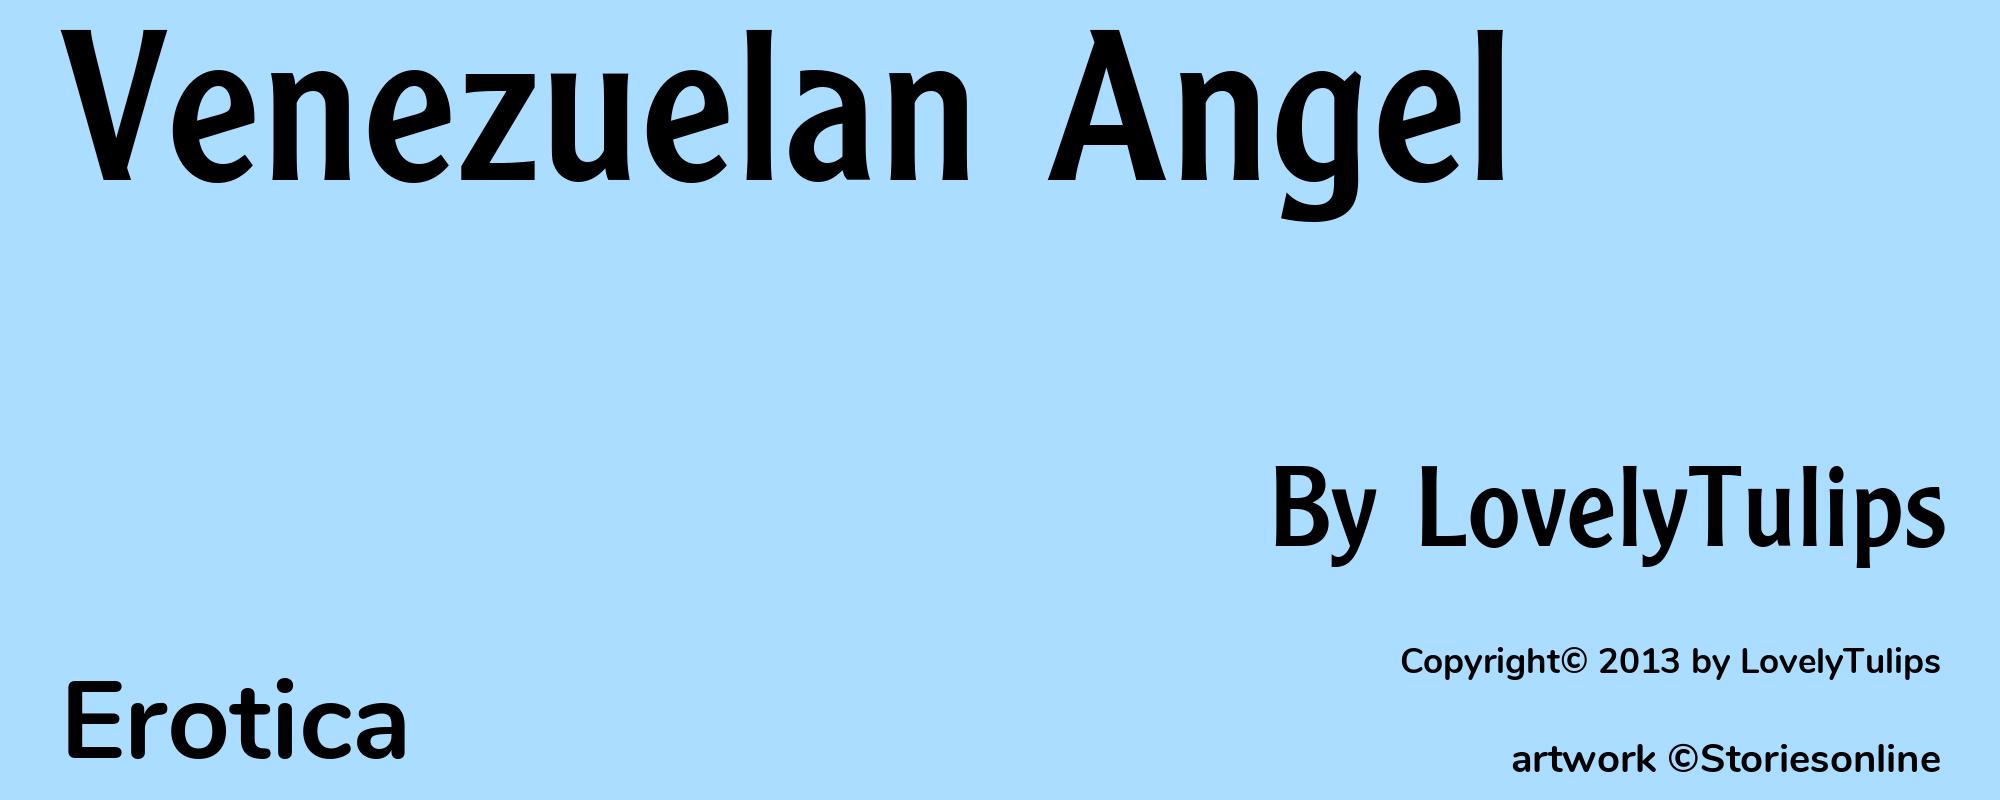 Venezuelan Angel - Cover